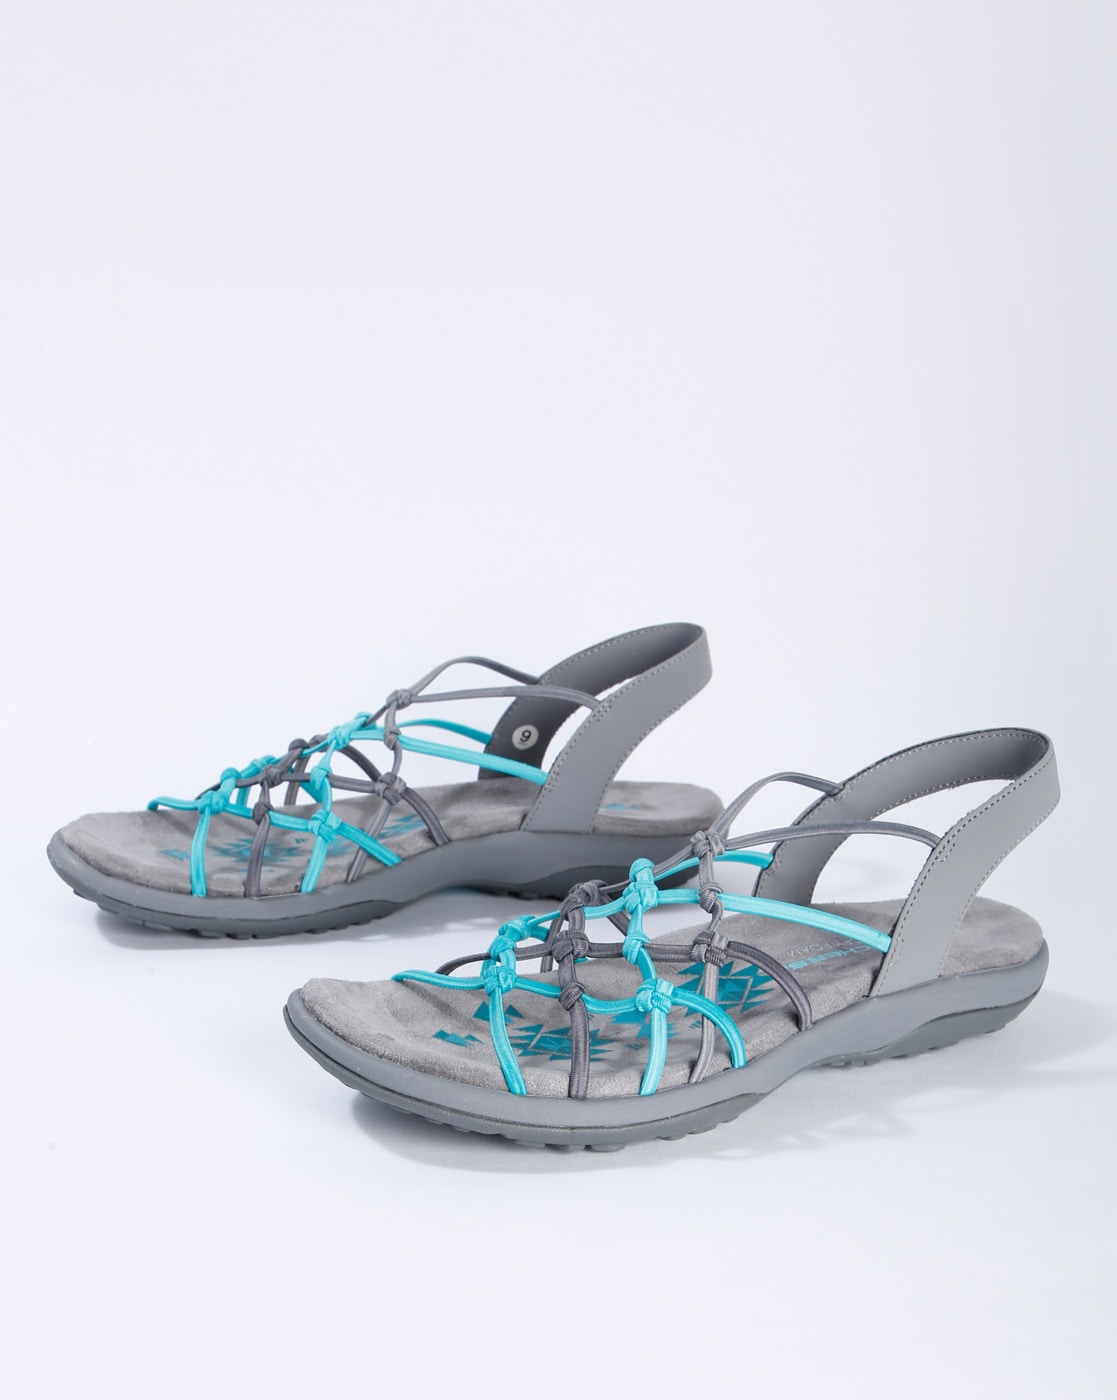 skechers strappy flat sandals